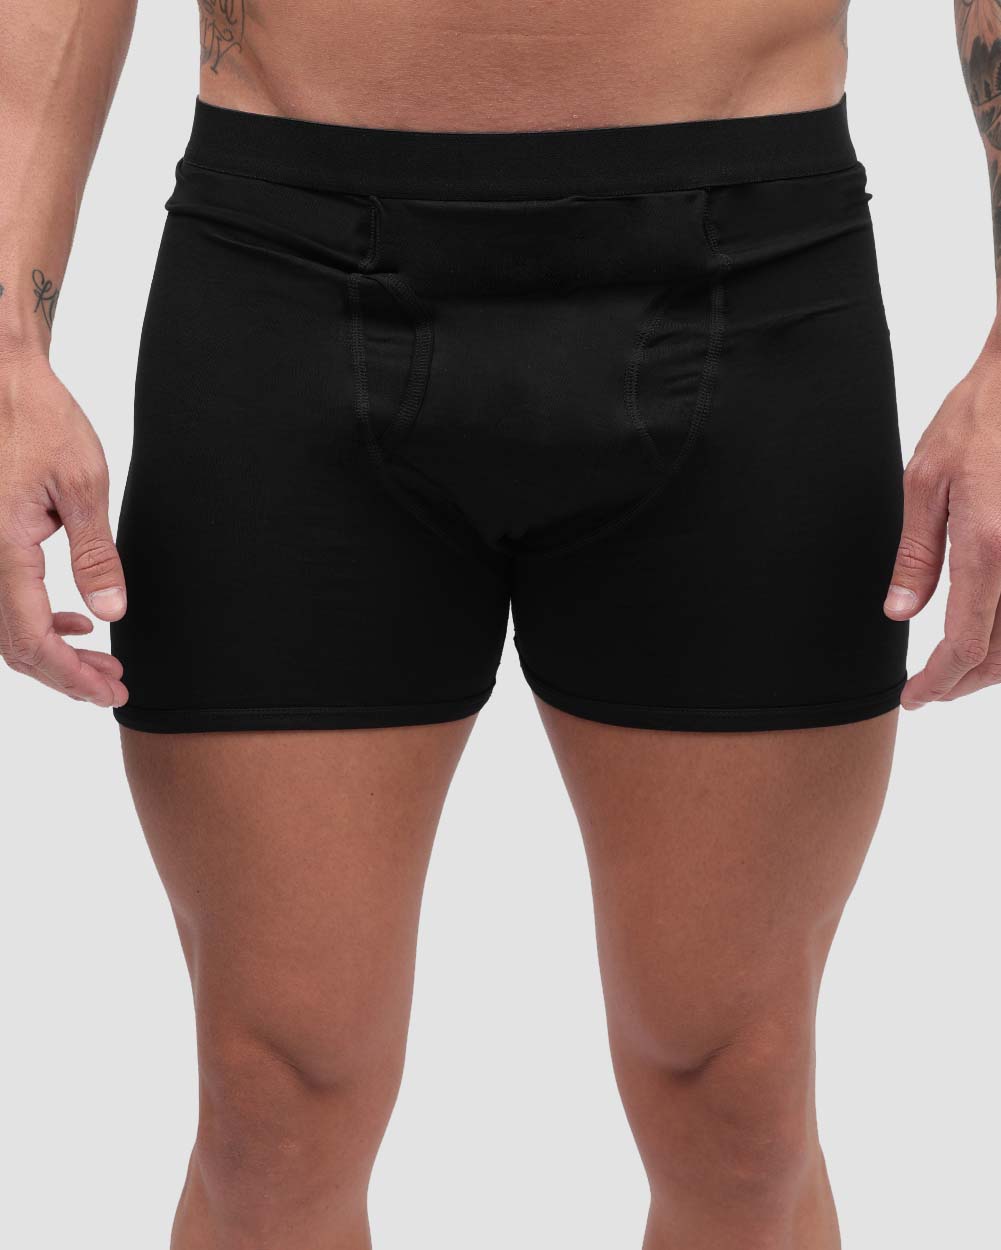 2 Packs Men's Boxer Briefs Secret Hidden Pocket, Travel Underwear with  Secret Front Stash Pocket Panties (Gray)